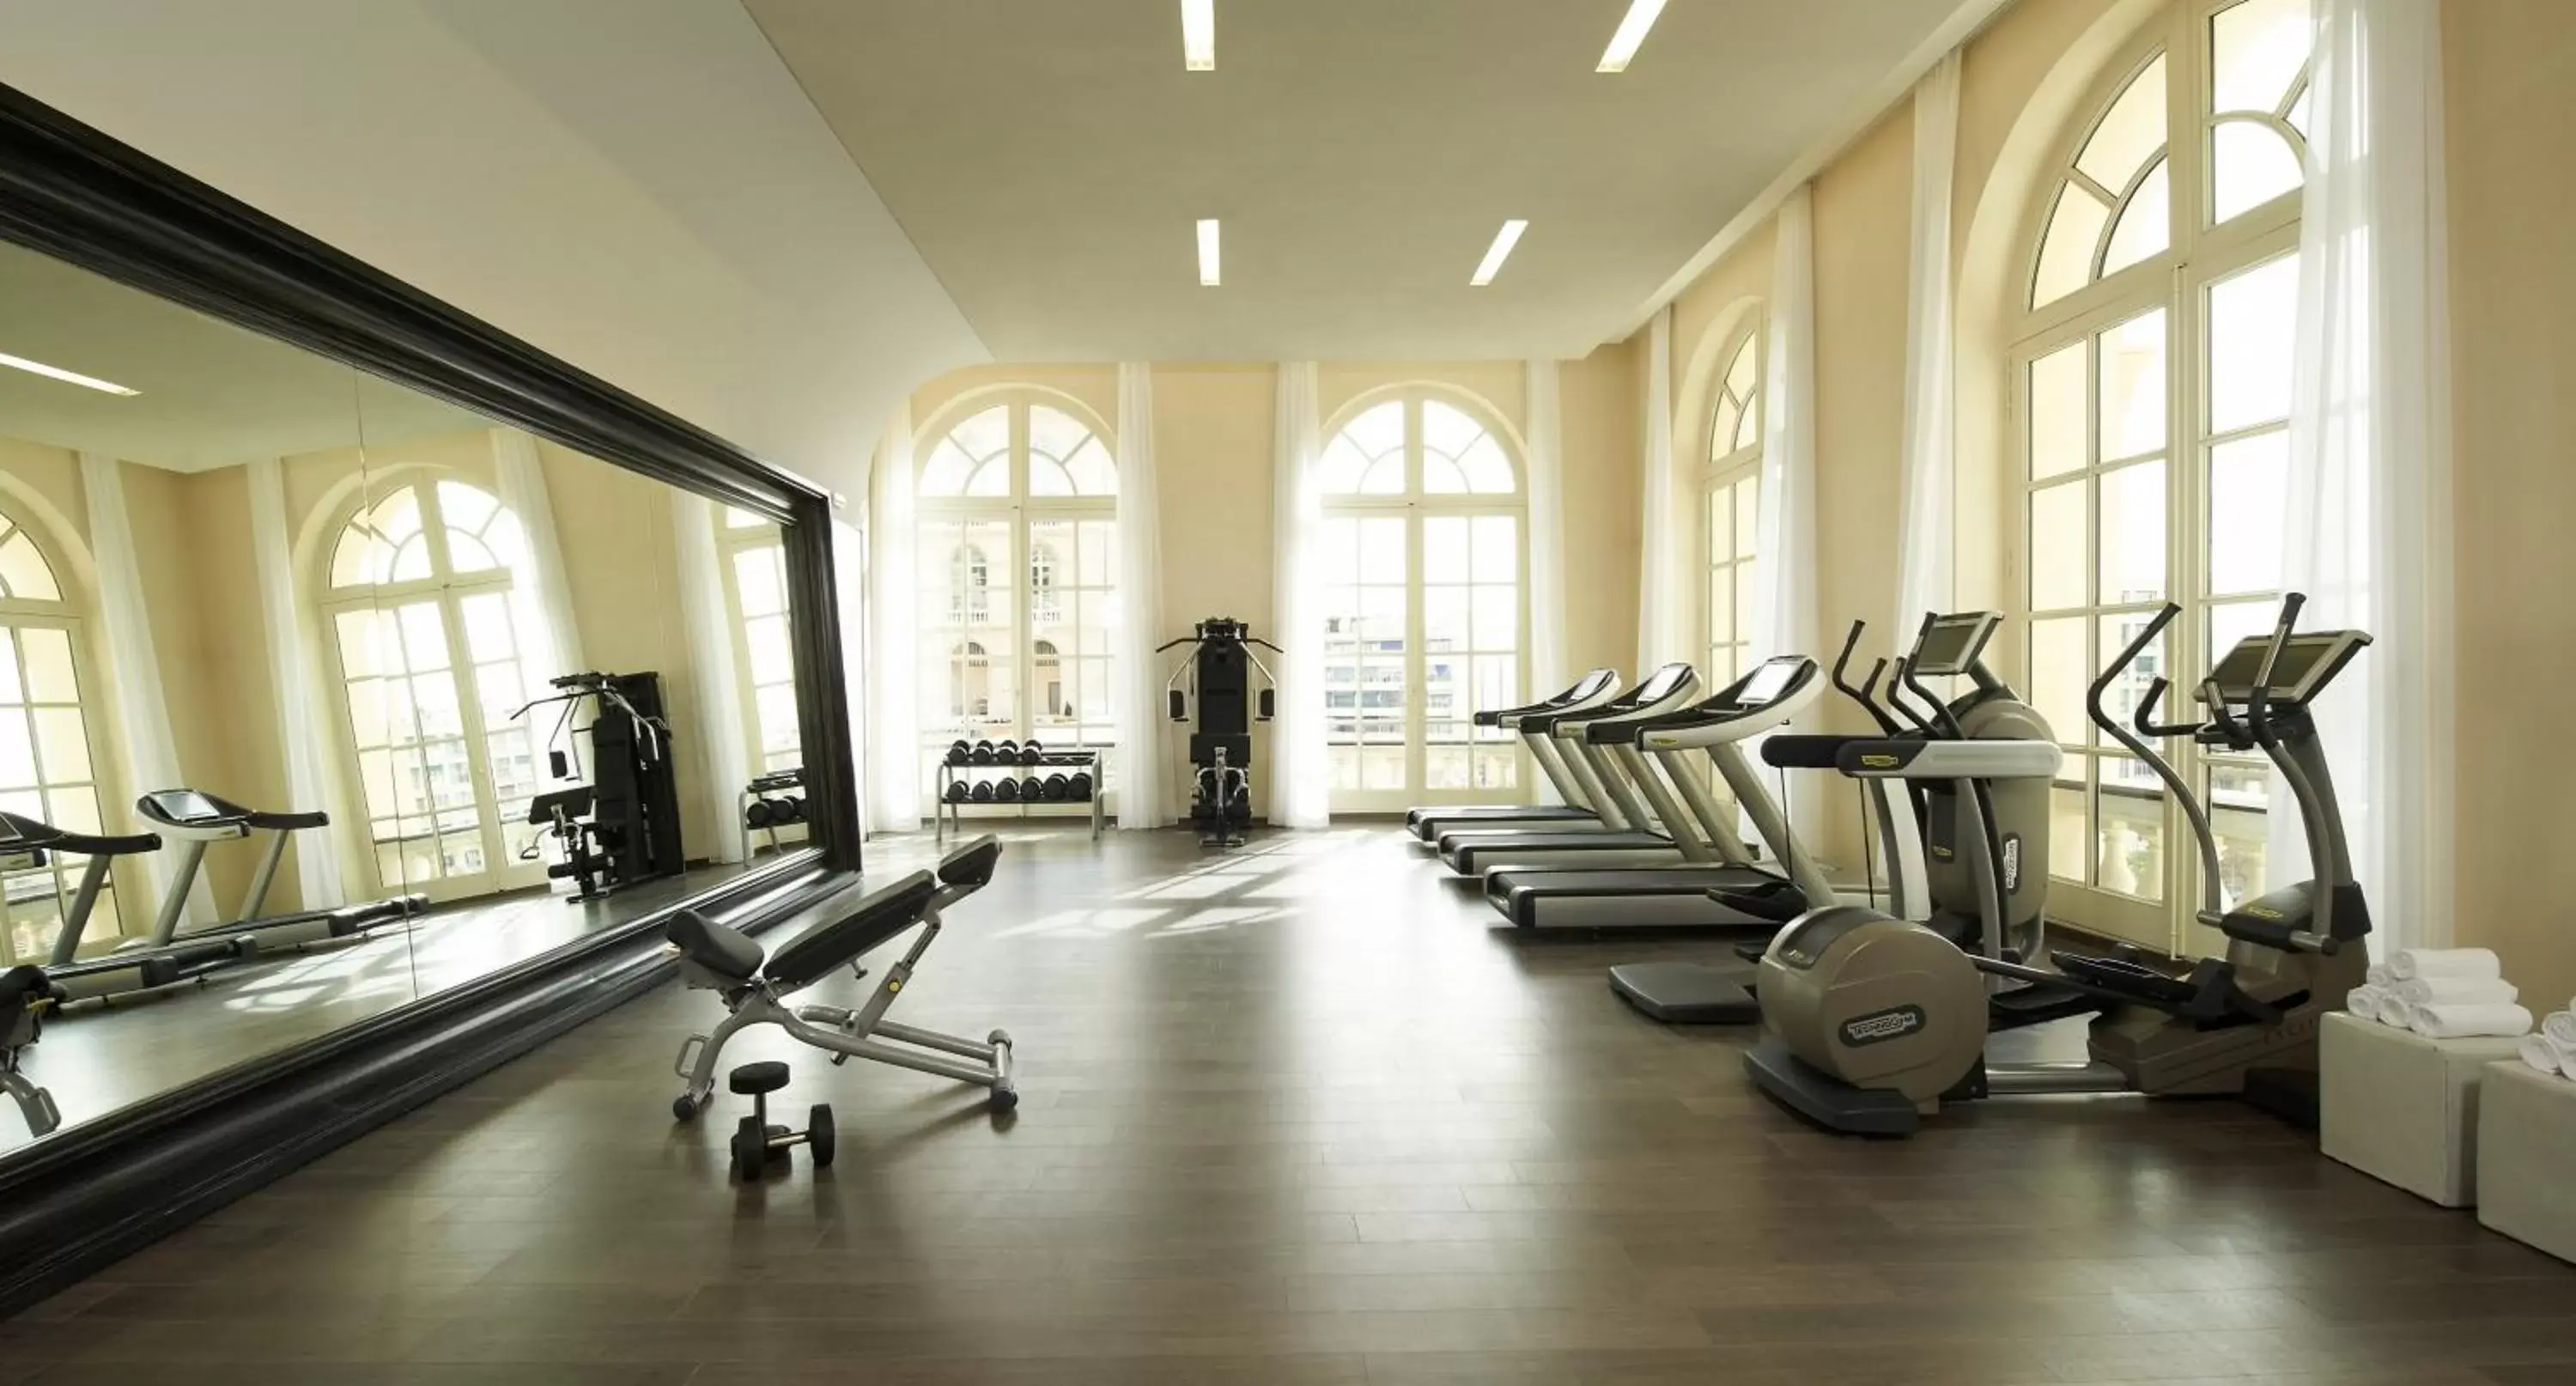 Fitness centre/facilities, Fitness Center/Facilities in InterContinental Marseille - Hotel Dieu, an IHG Hotel